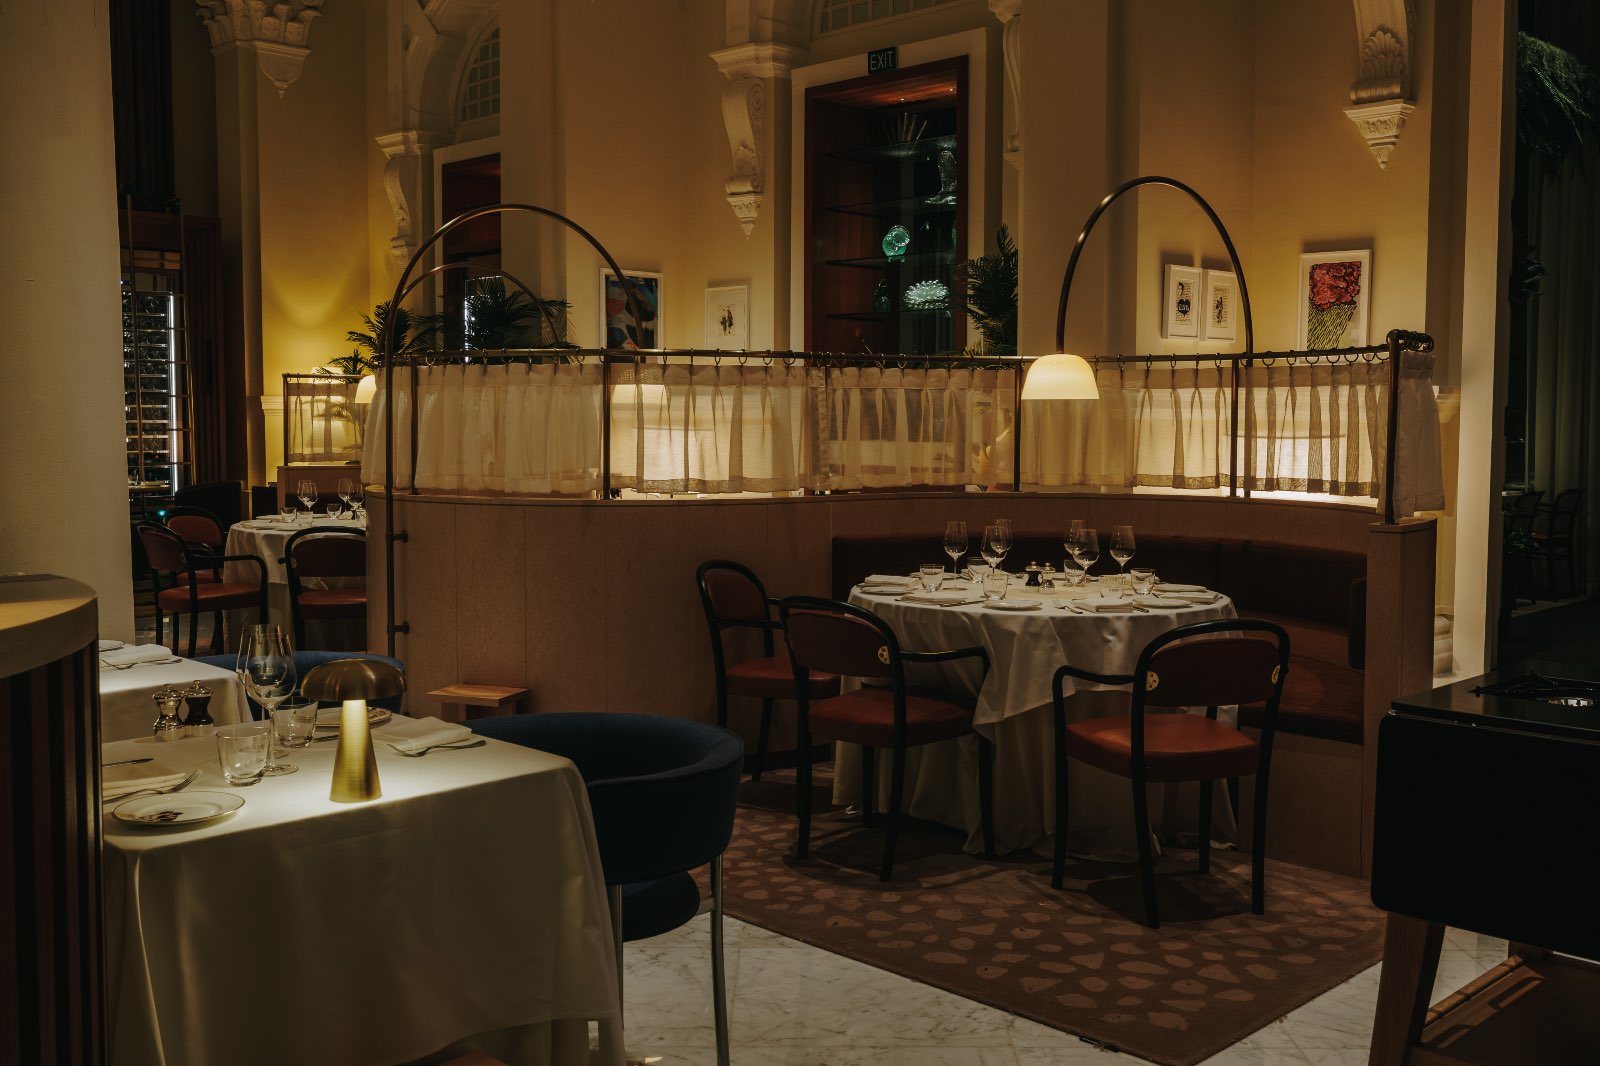 , A grand affair: Brasserie Astoria brings back the spirit of grand dining halls to Singapore